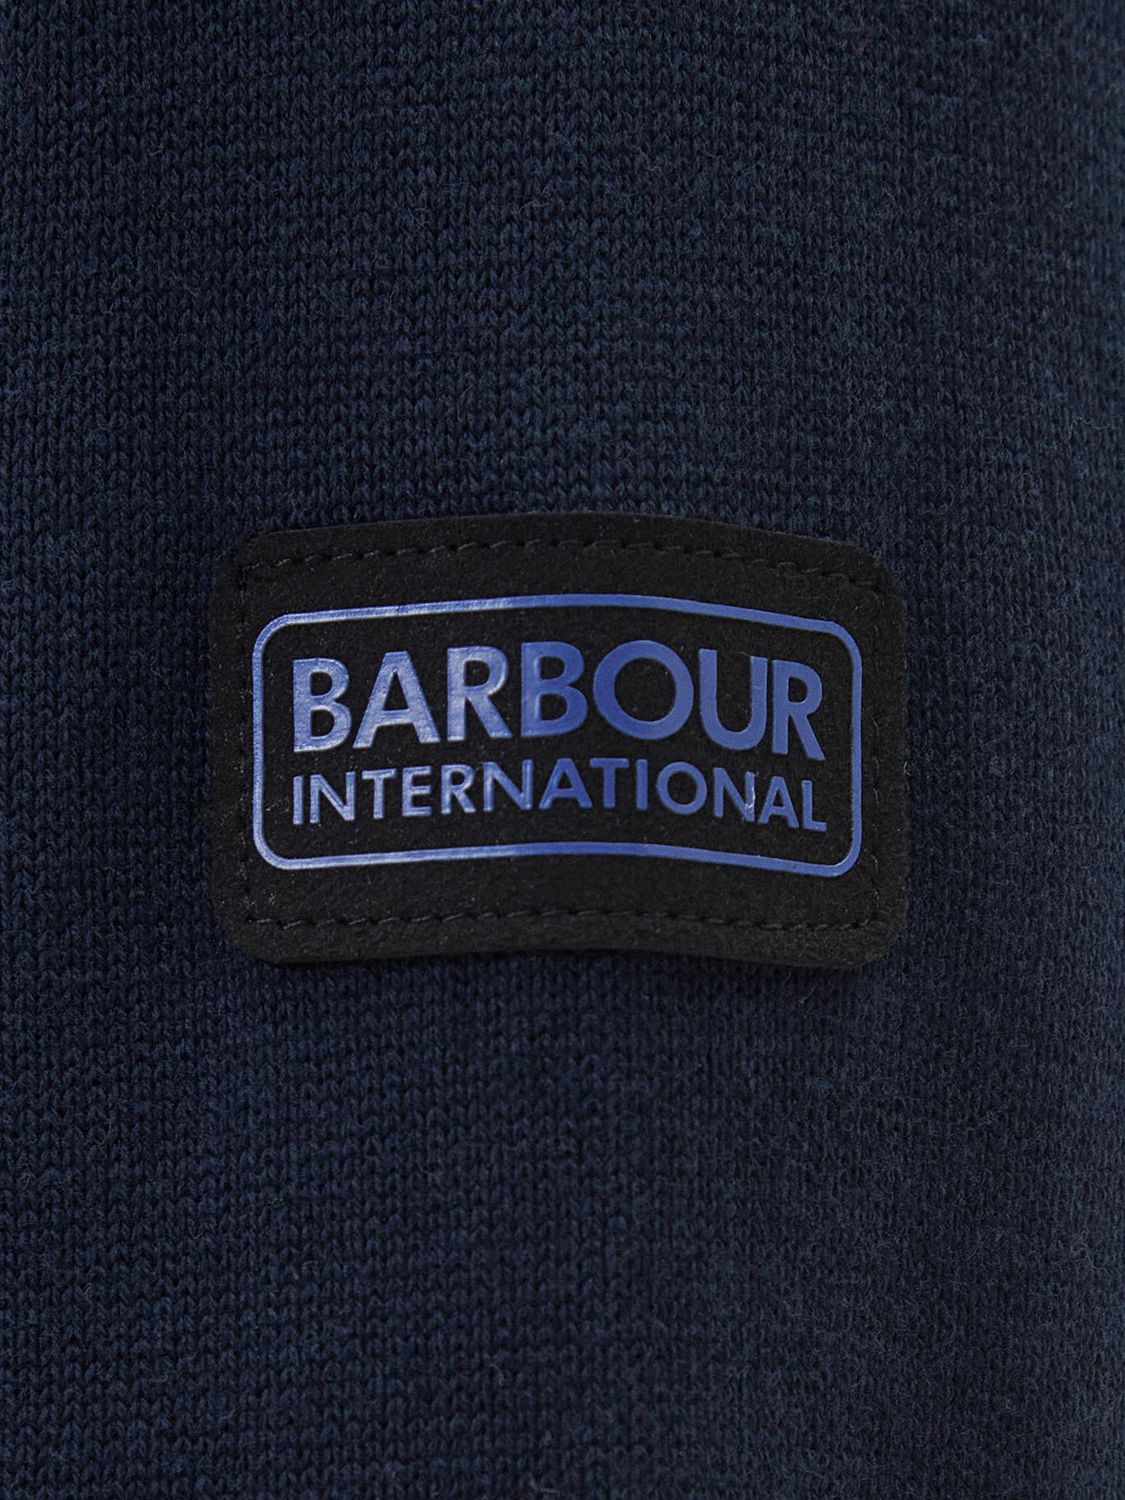 Buy Barbour International Cotton Crew Neck Knit Jumper Online at johnlewis.com